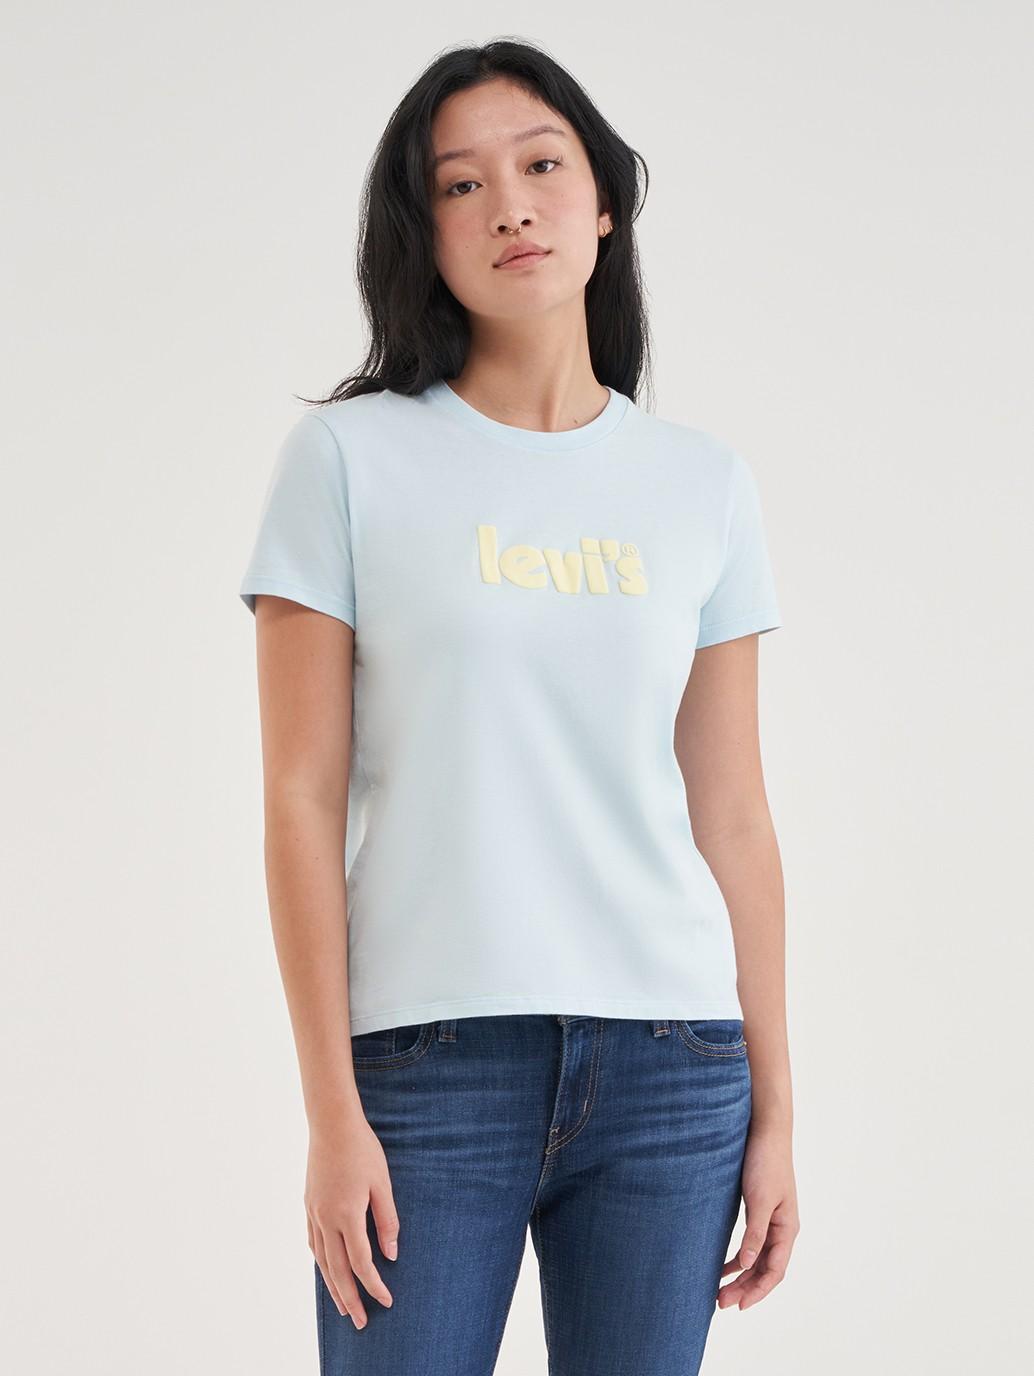 Buy Levi's® Women's Perfect T-Shirt | Levi’s Official Online Store SG